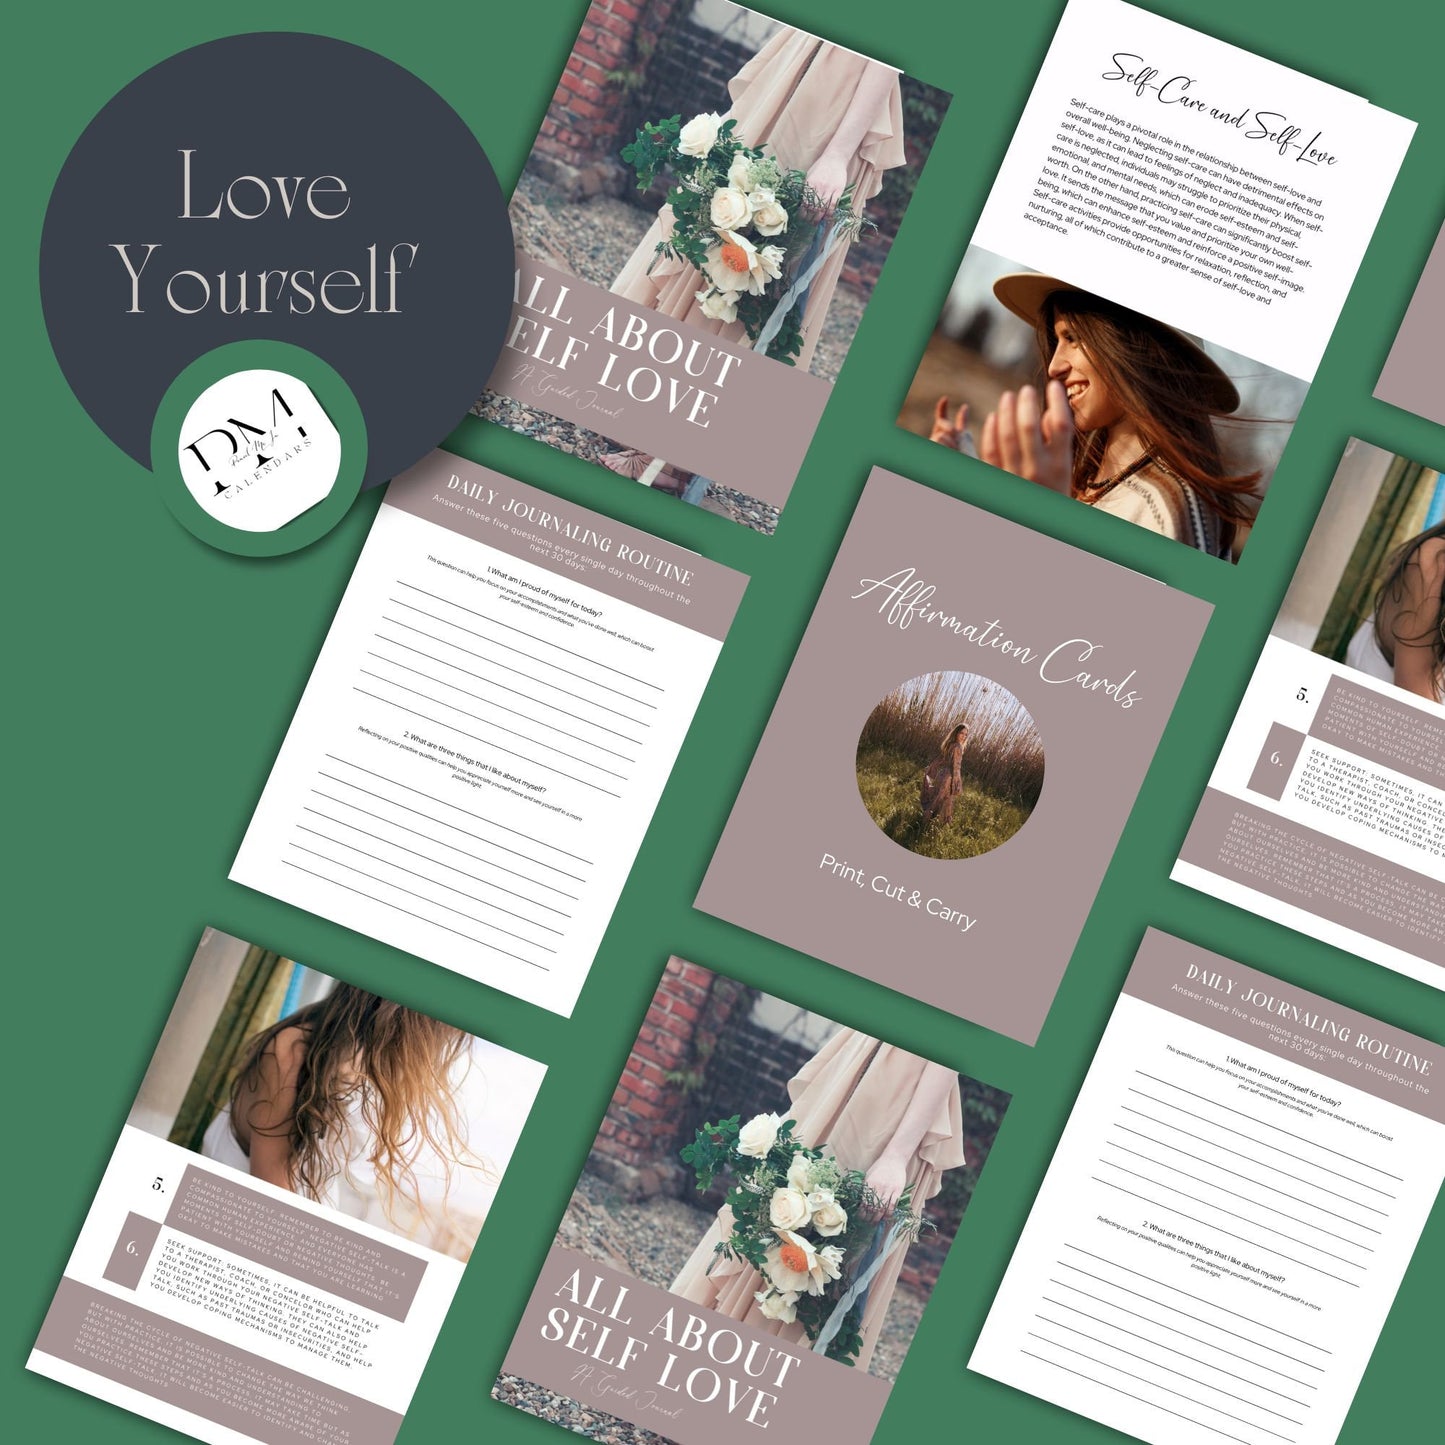 Self-Love Prompted Journal Self-Love Planner Printable Mindfulness Workbook Self-Love Journal Mental Health Worksheet Self-Care Mood Tracker